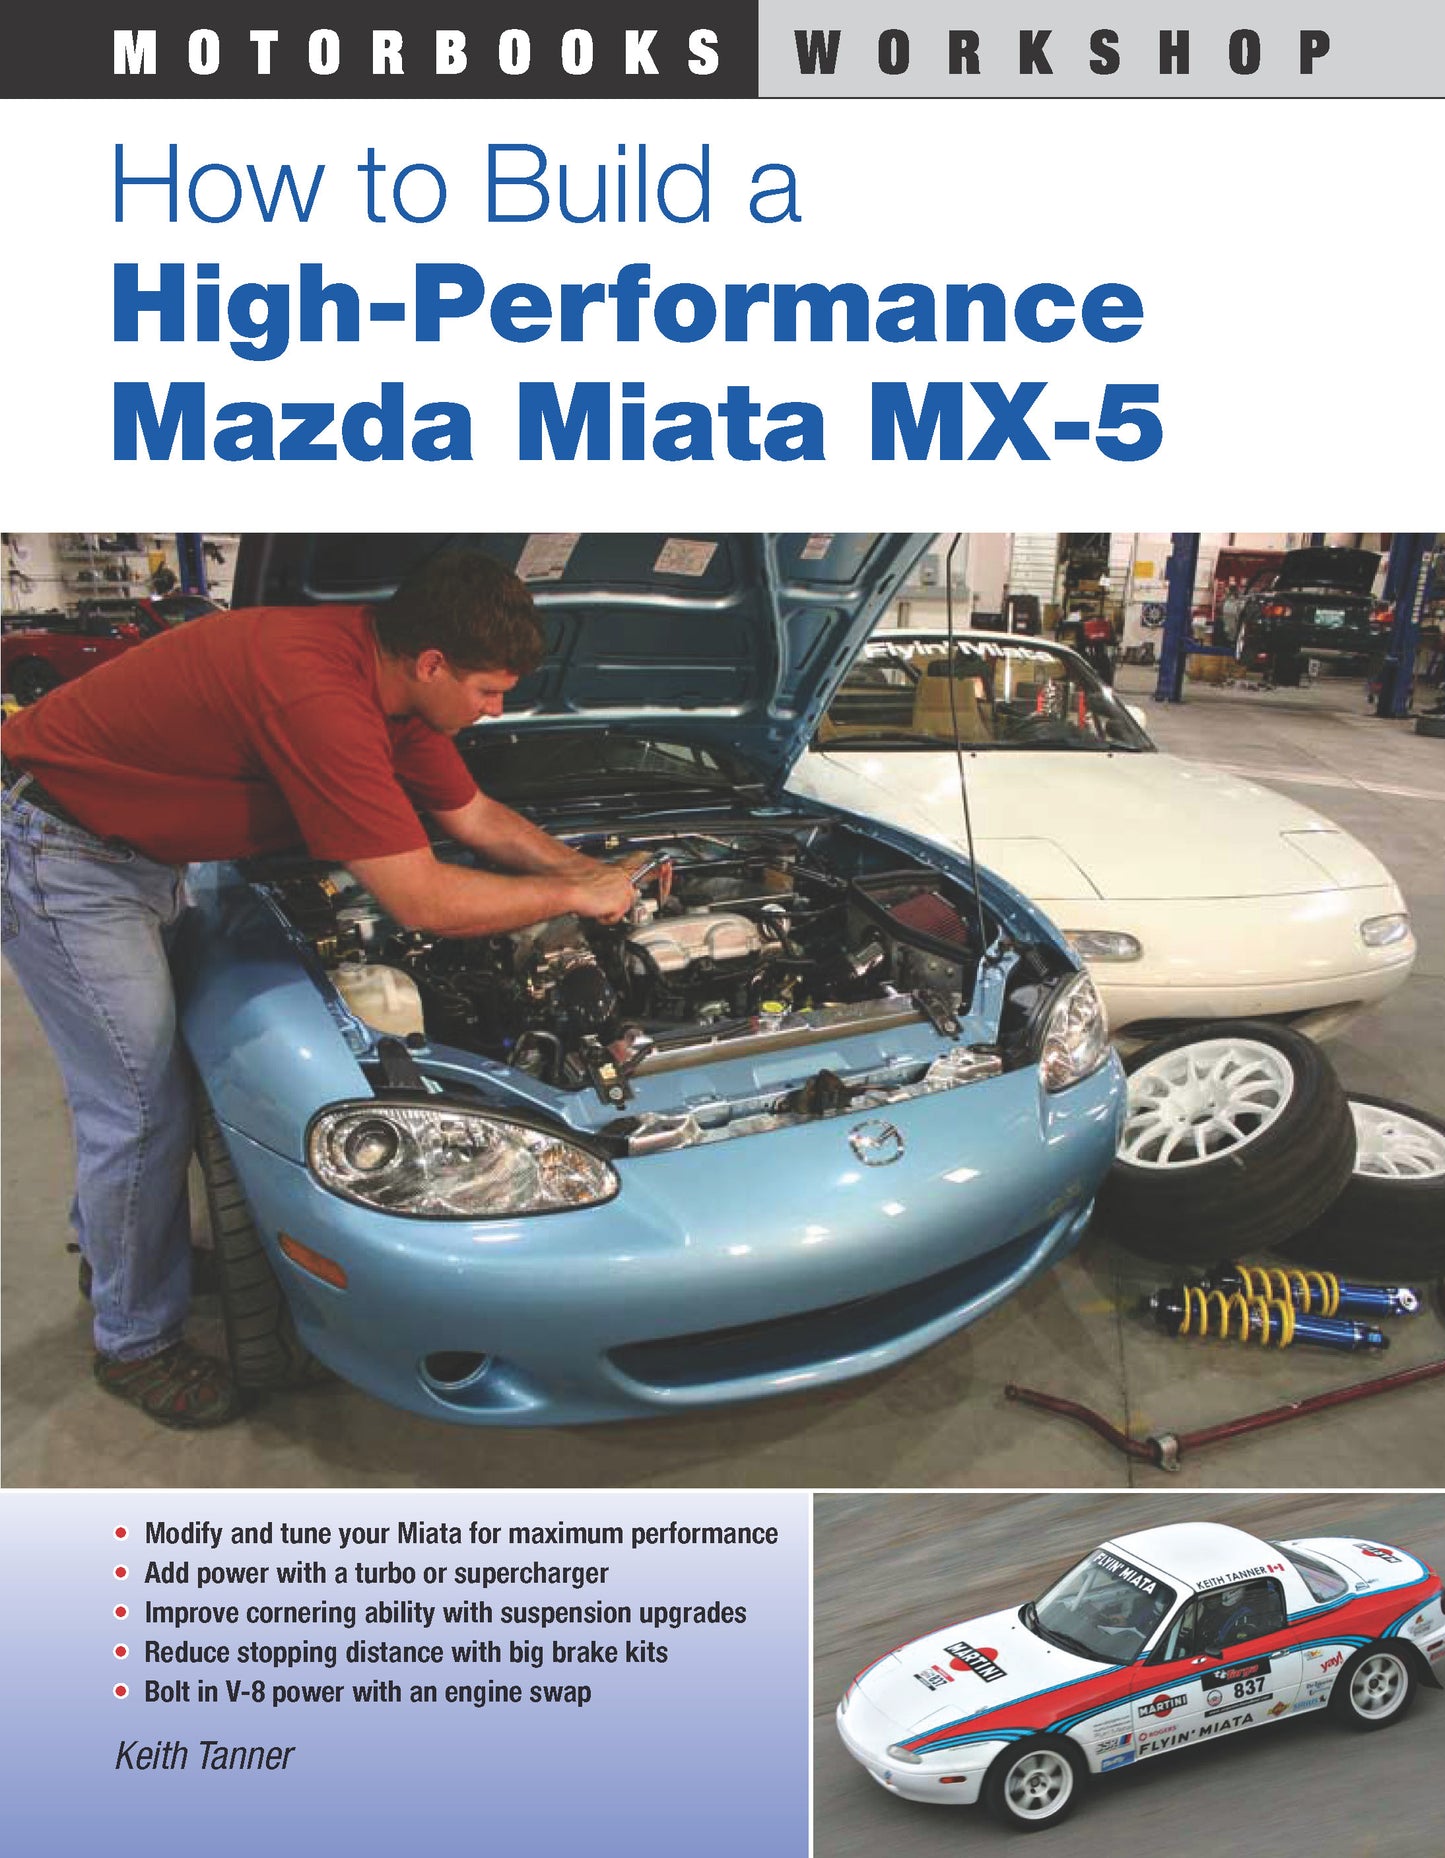 How To Build a High Performance Mazda Miata